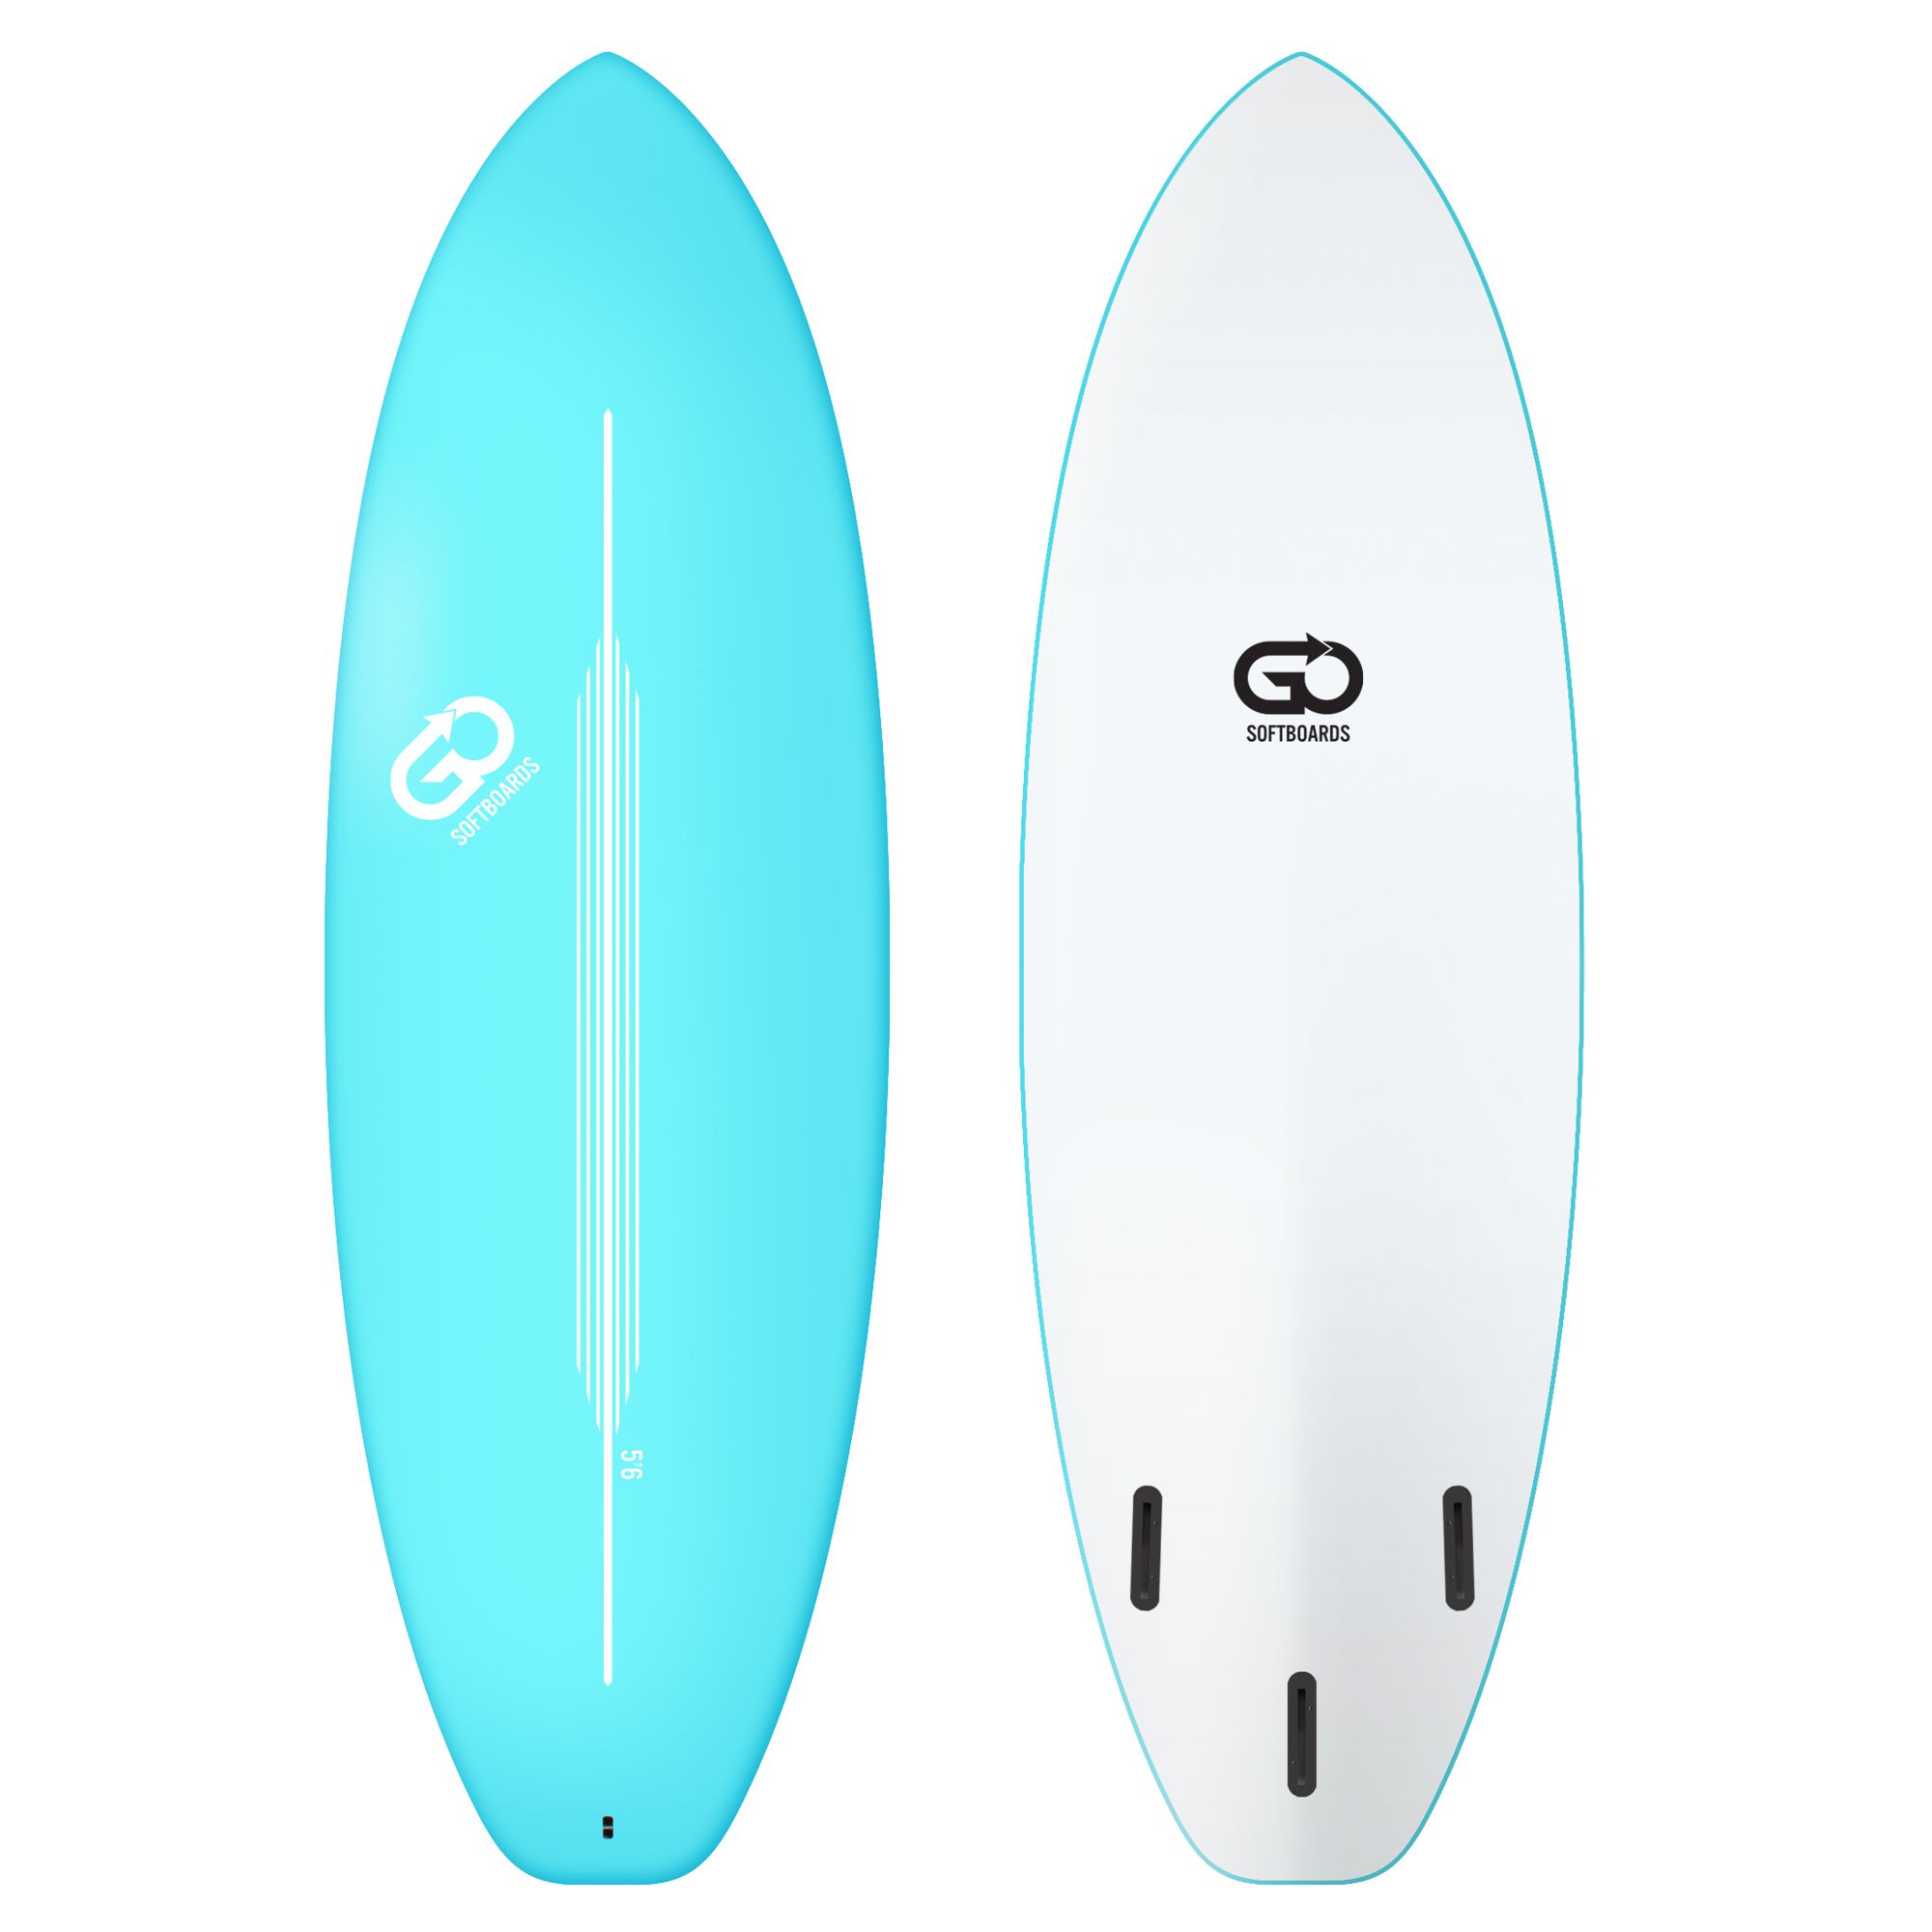 GO Softboard 5.6 Surf Range Soft Top Surfboard Bla